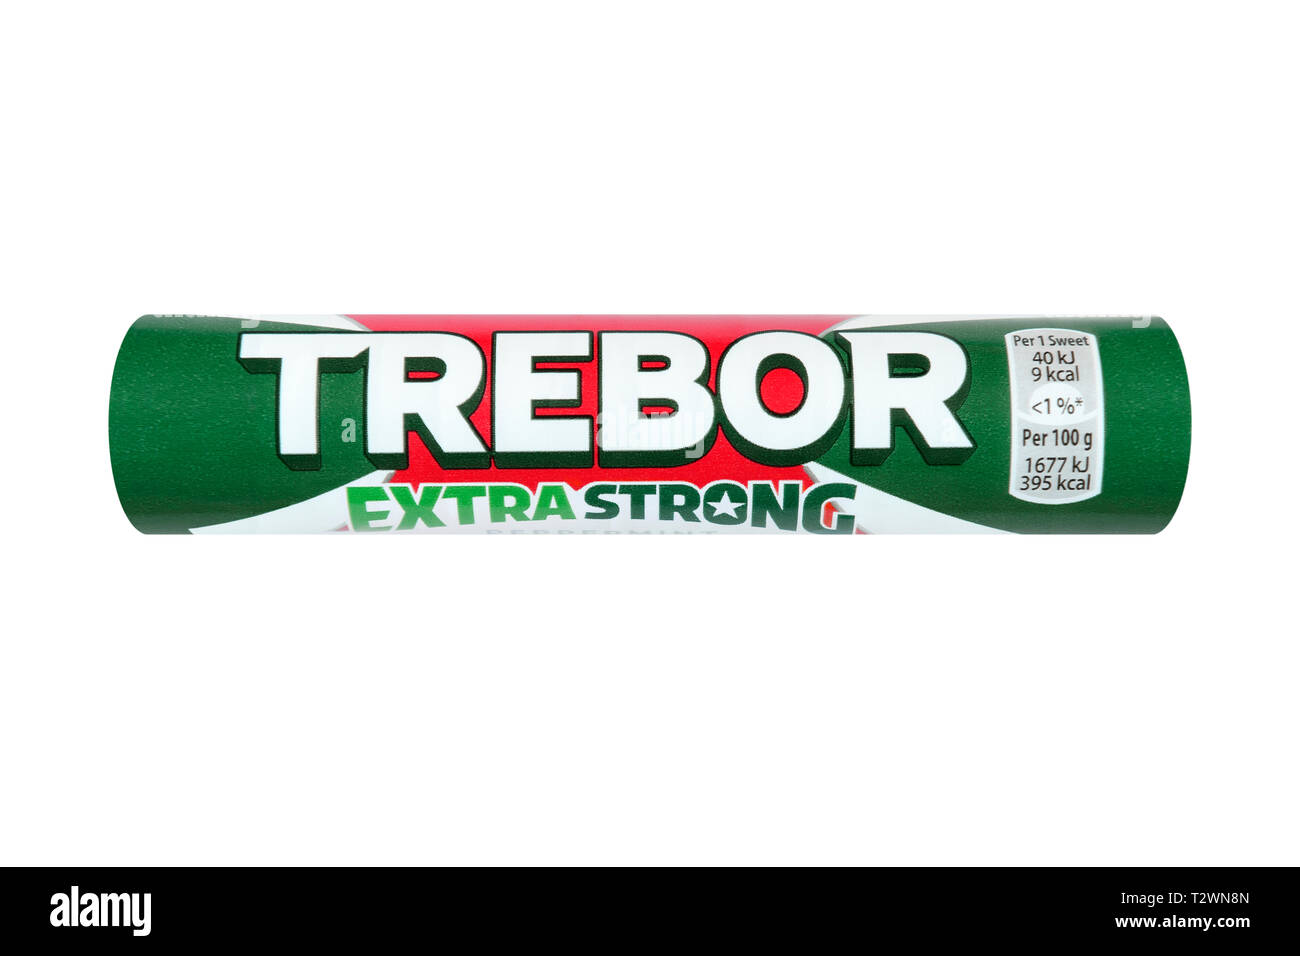 Trebor Extra Strong Mints, United Kingdom Stock Photo